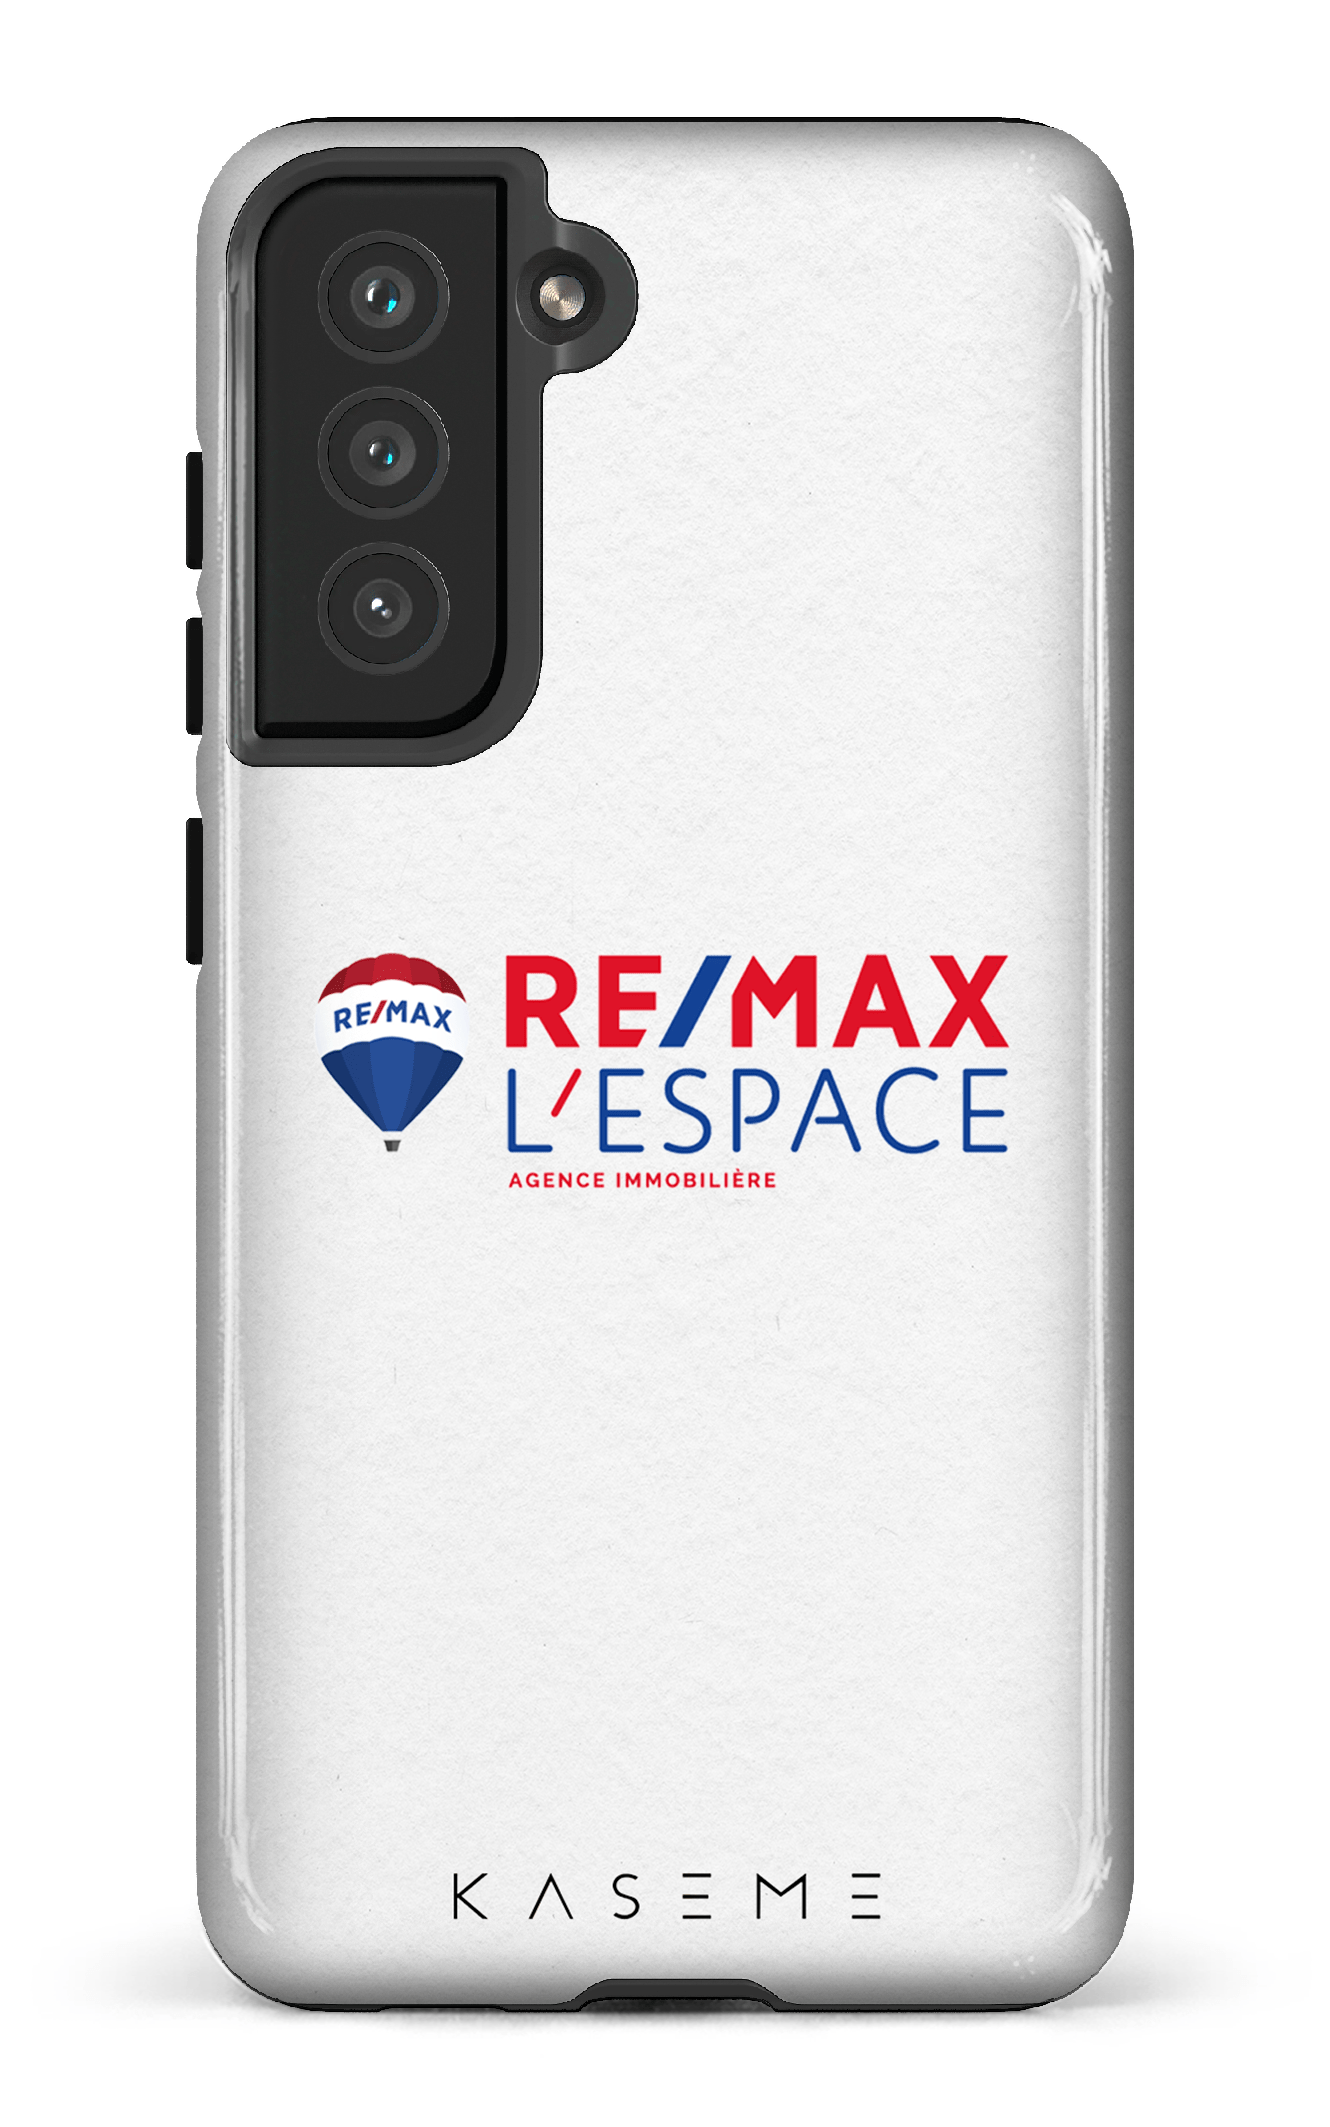 Remax L'Espace Blanc - Galaxy S21 FE